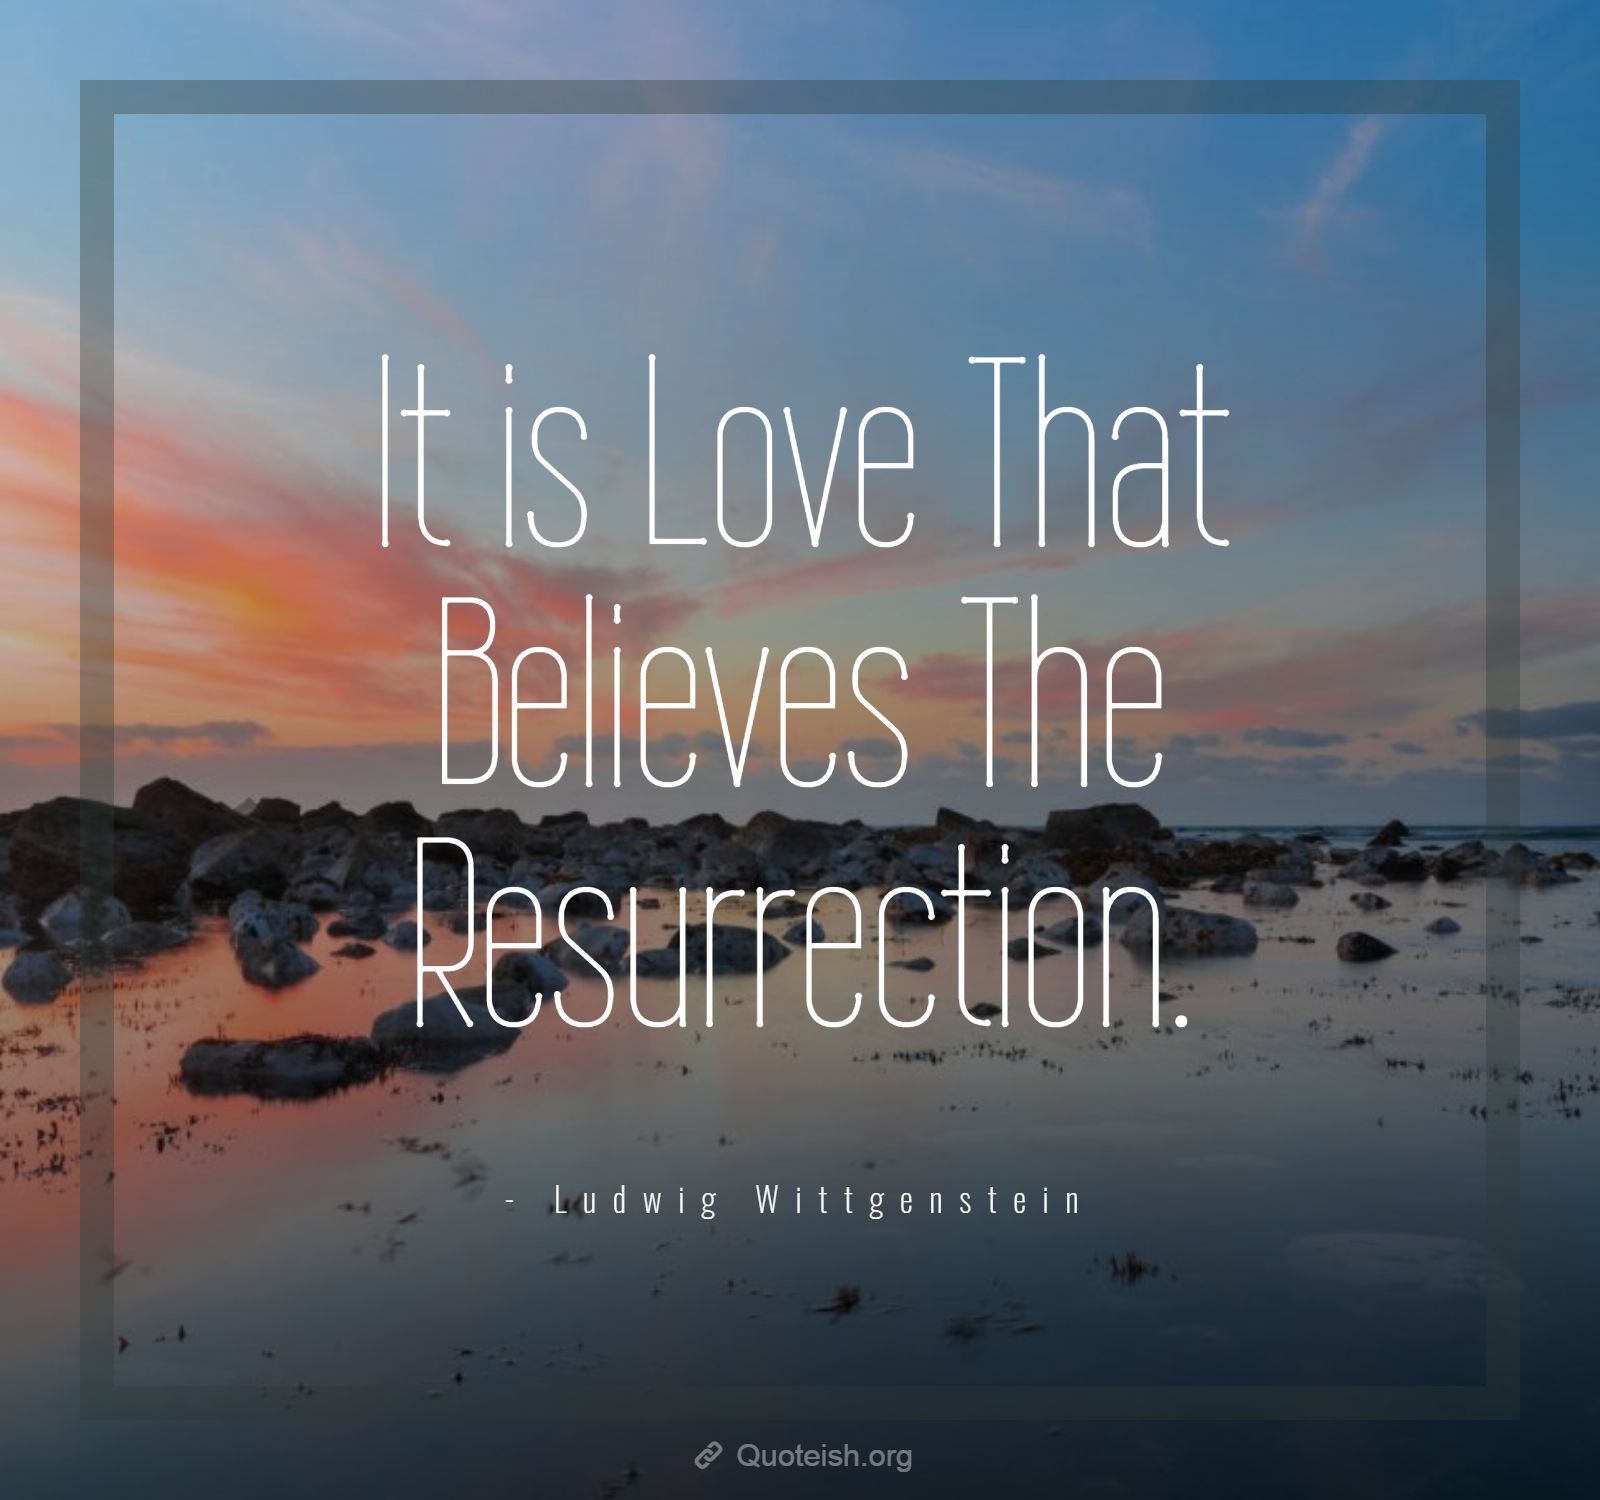 33 Resurrection Quotes - QUOTEISH